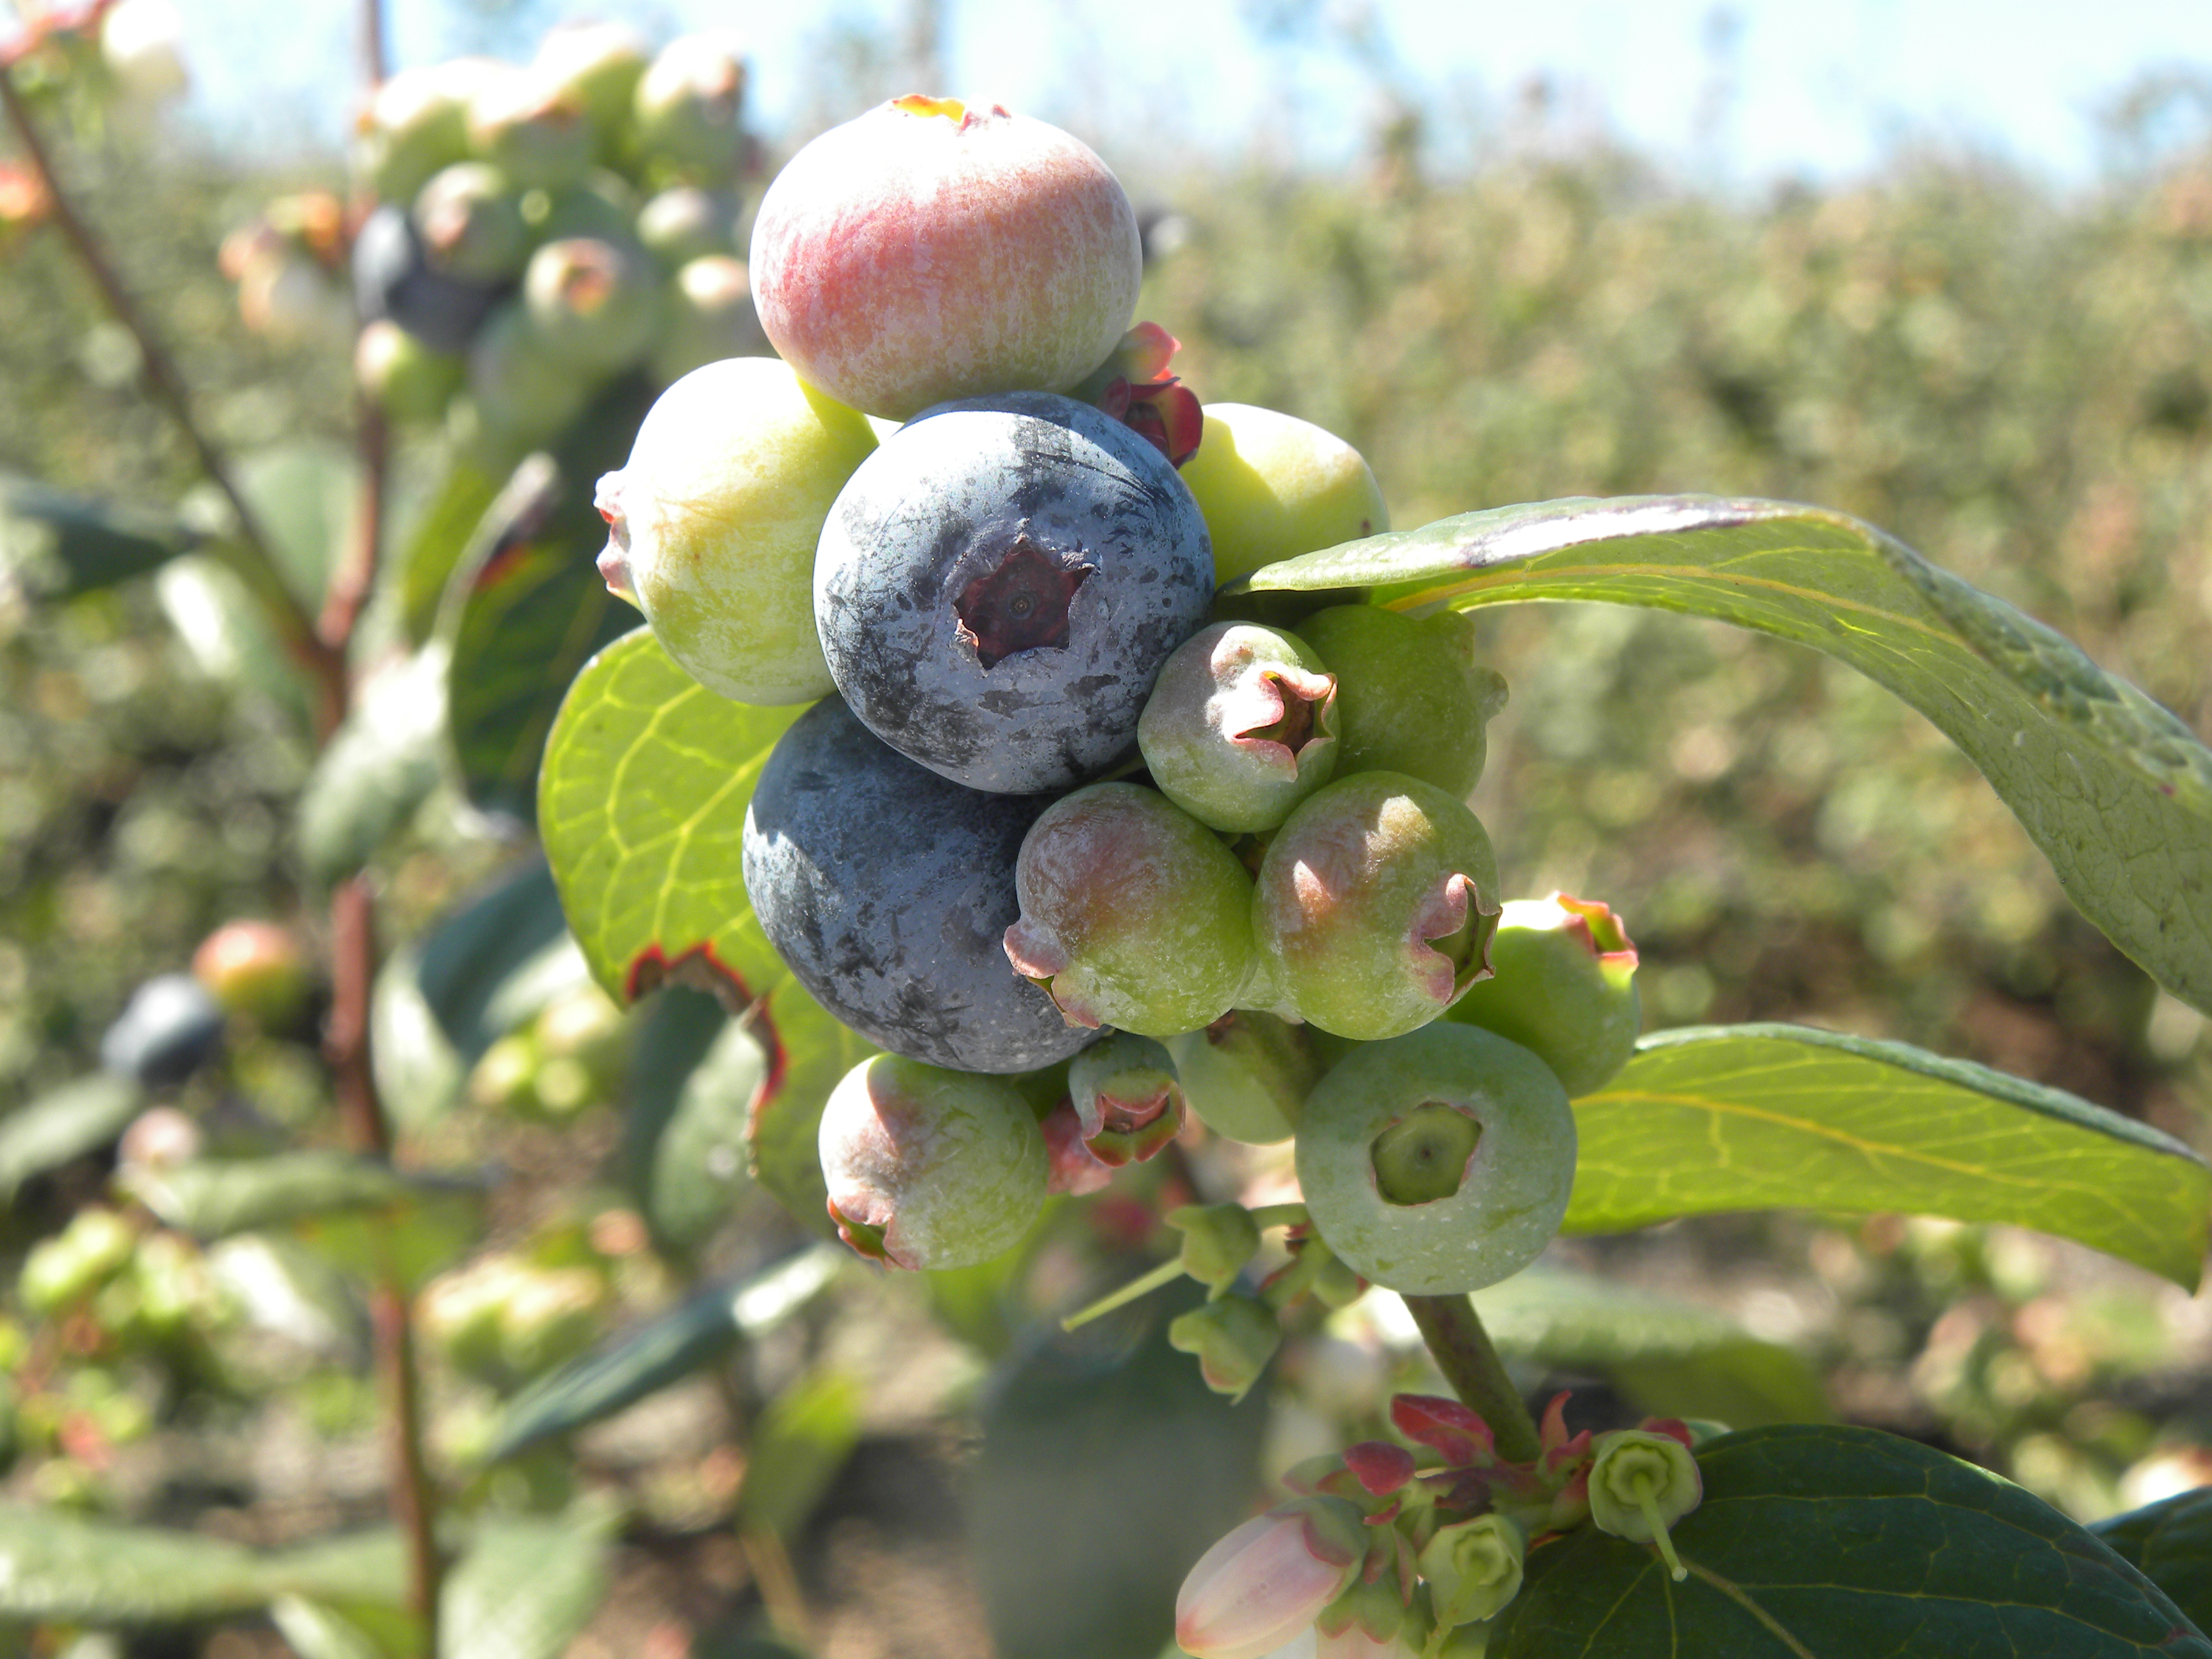 U-Pick Blueberries